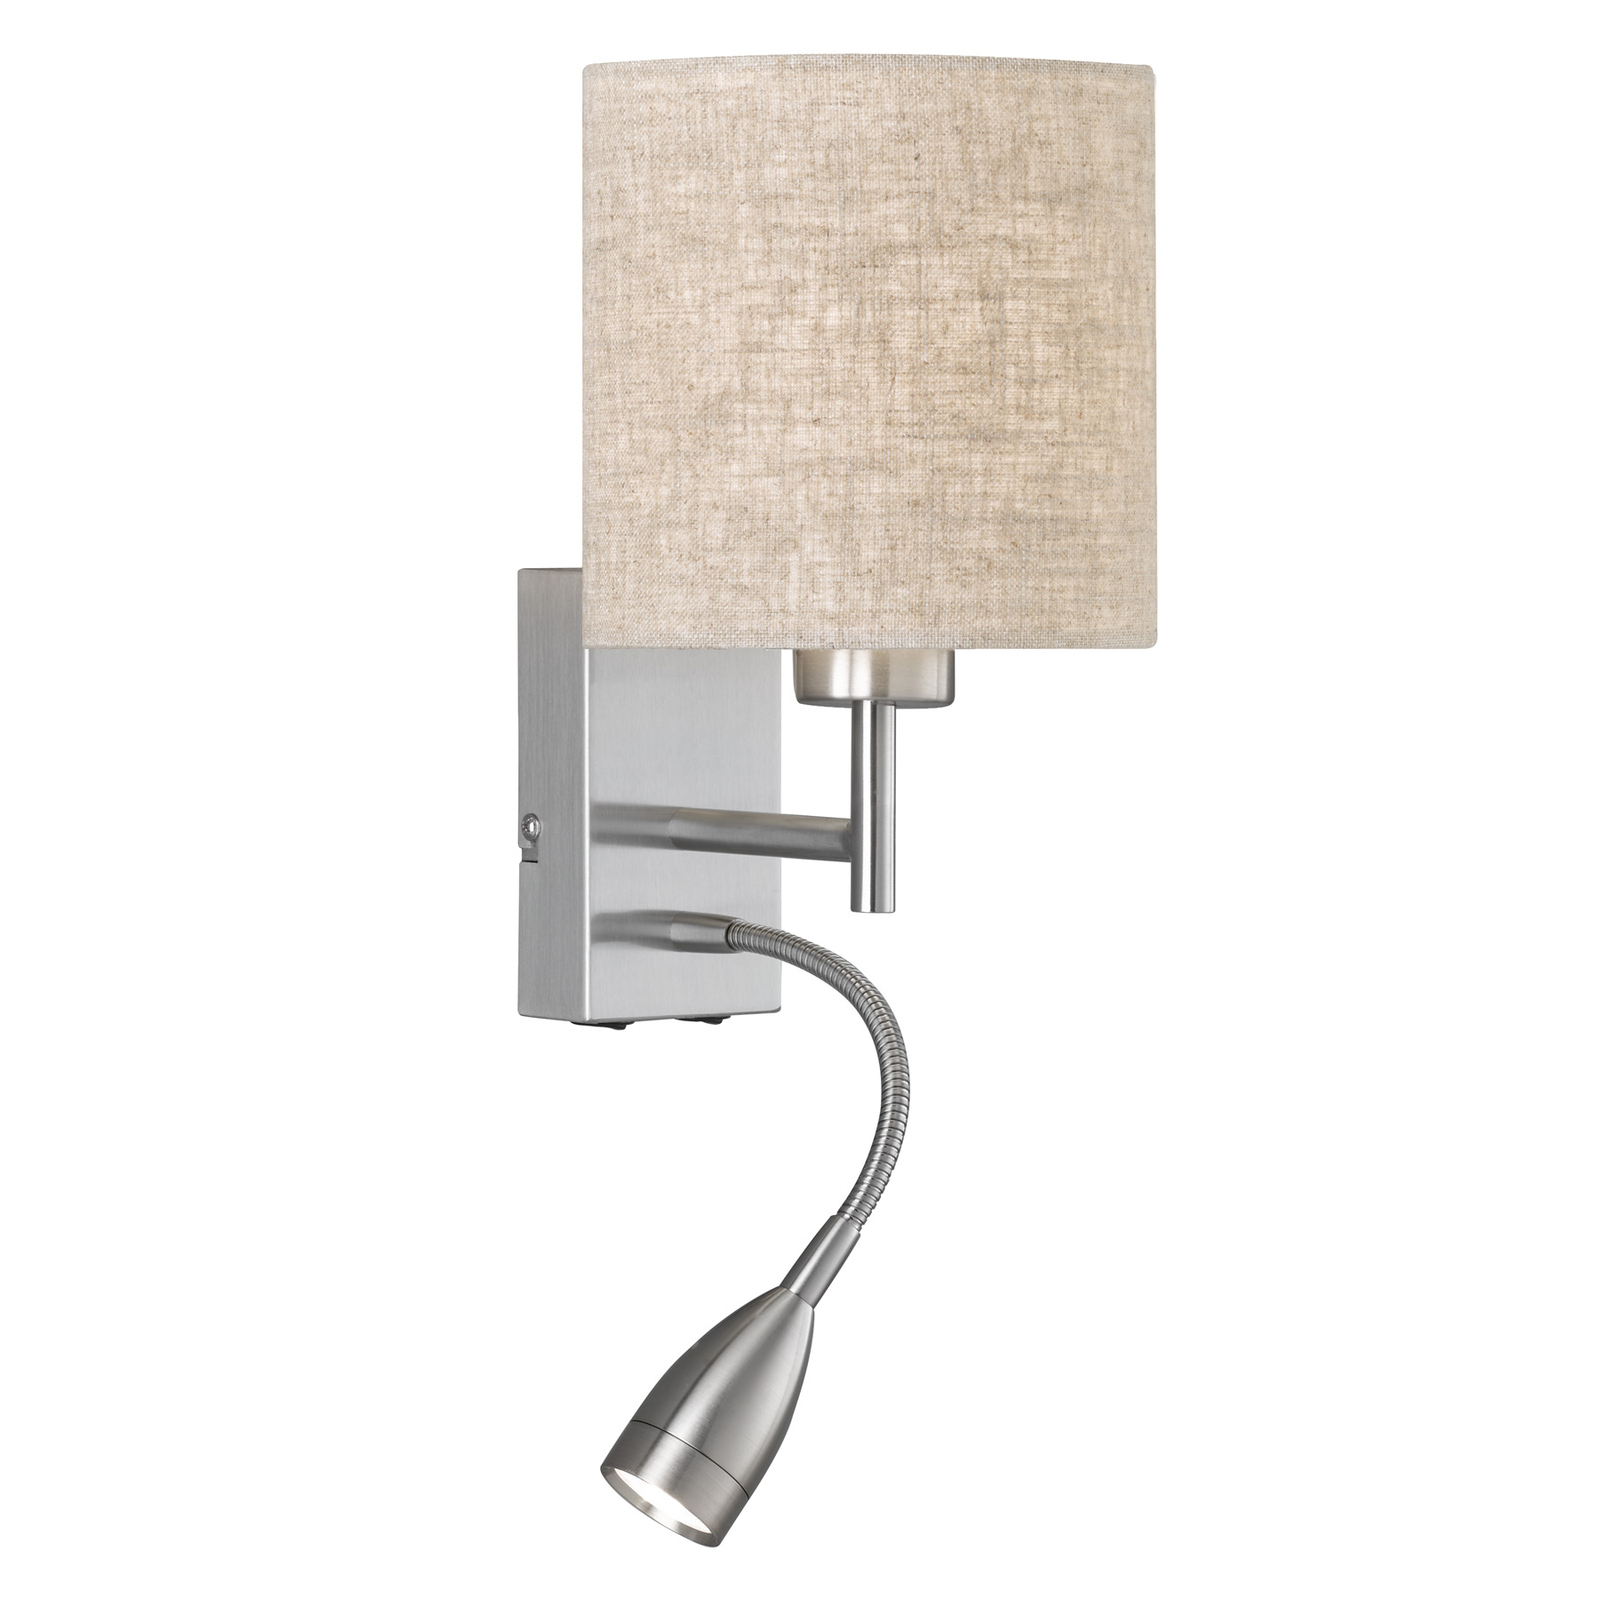 Dreamer wall lamp LED reading light nickel/linen